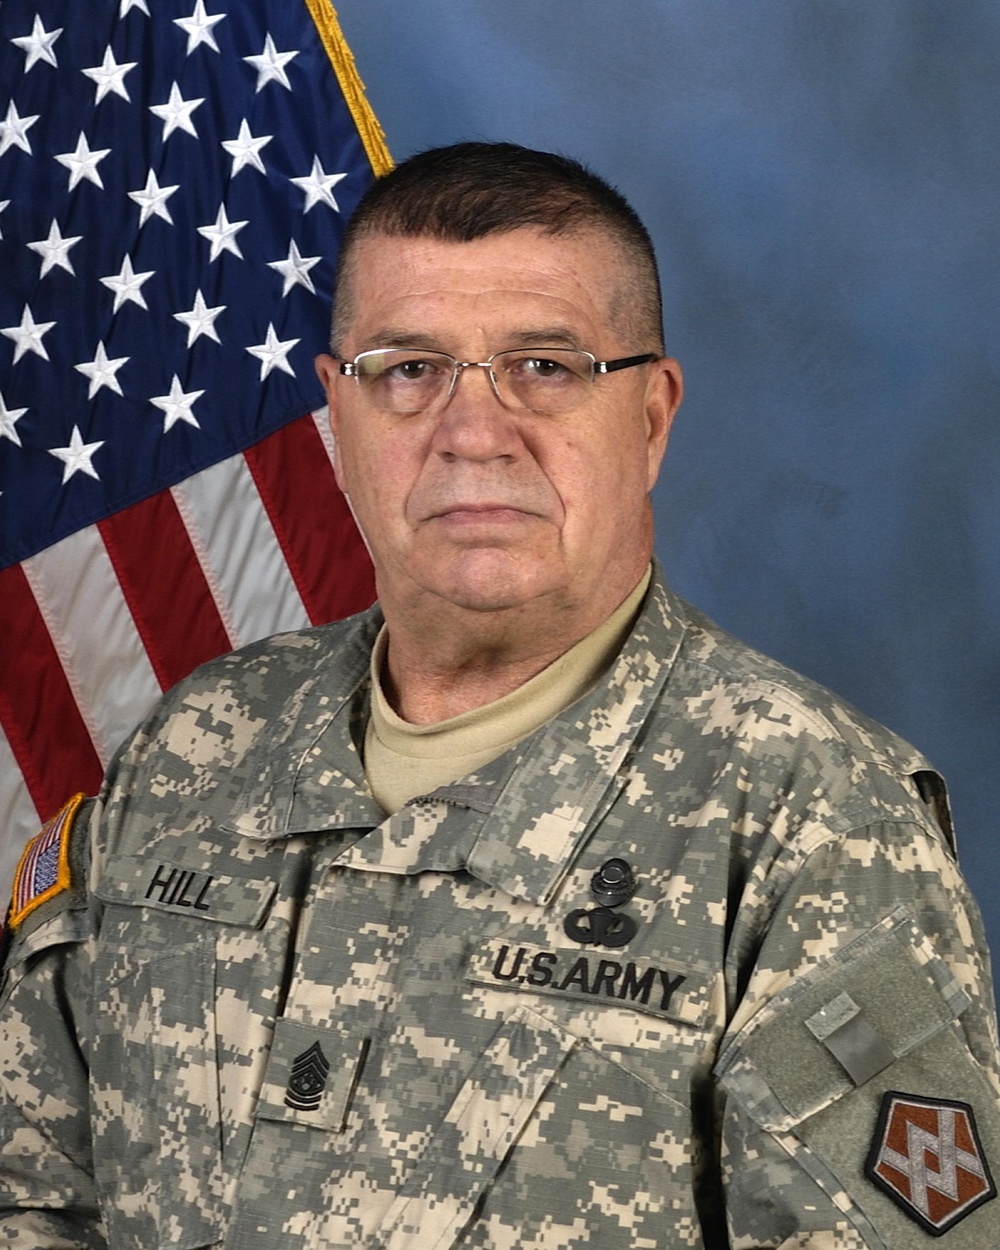 Command Sgt. Maj. James F. Hill, U.S Army 55th Sustainment Brigade